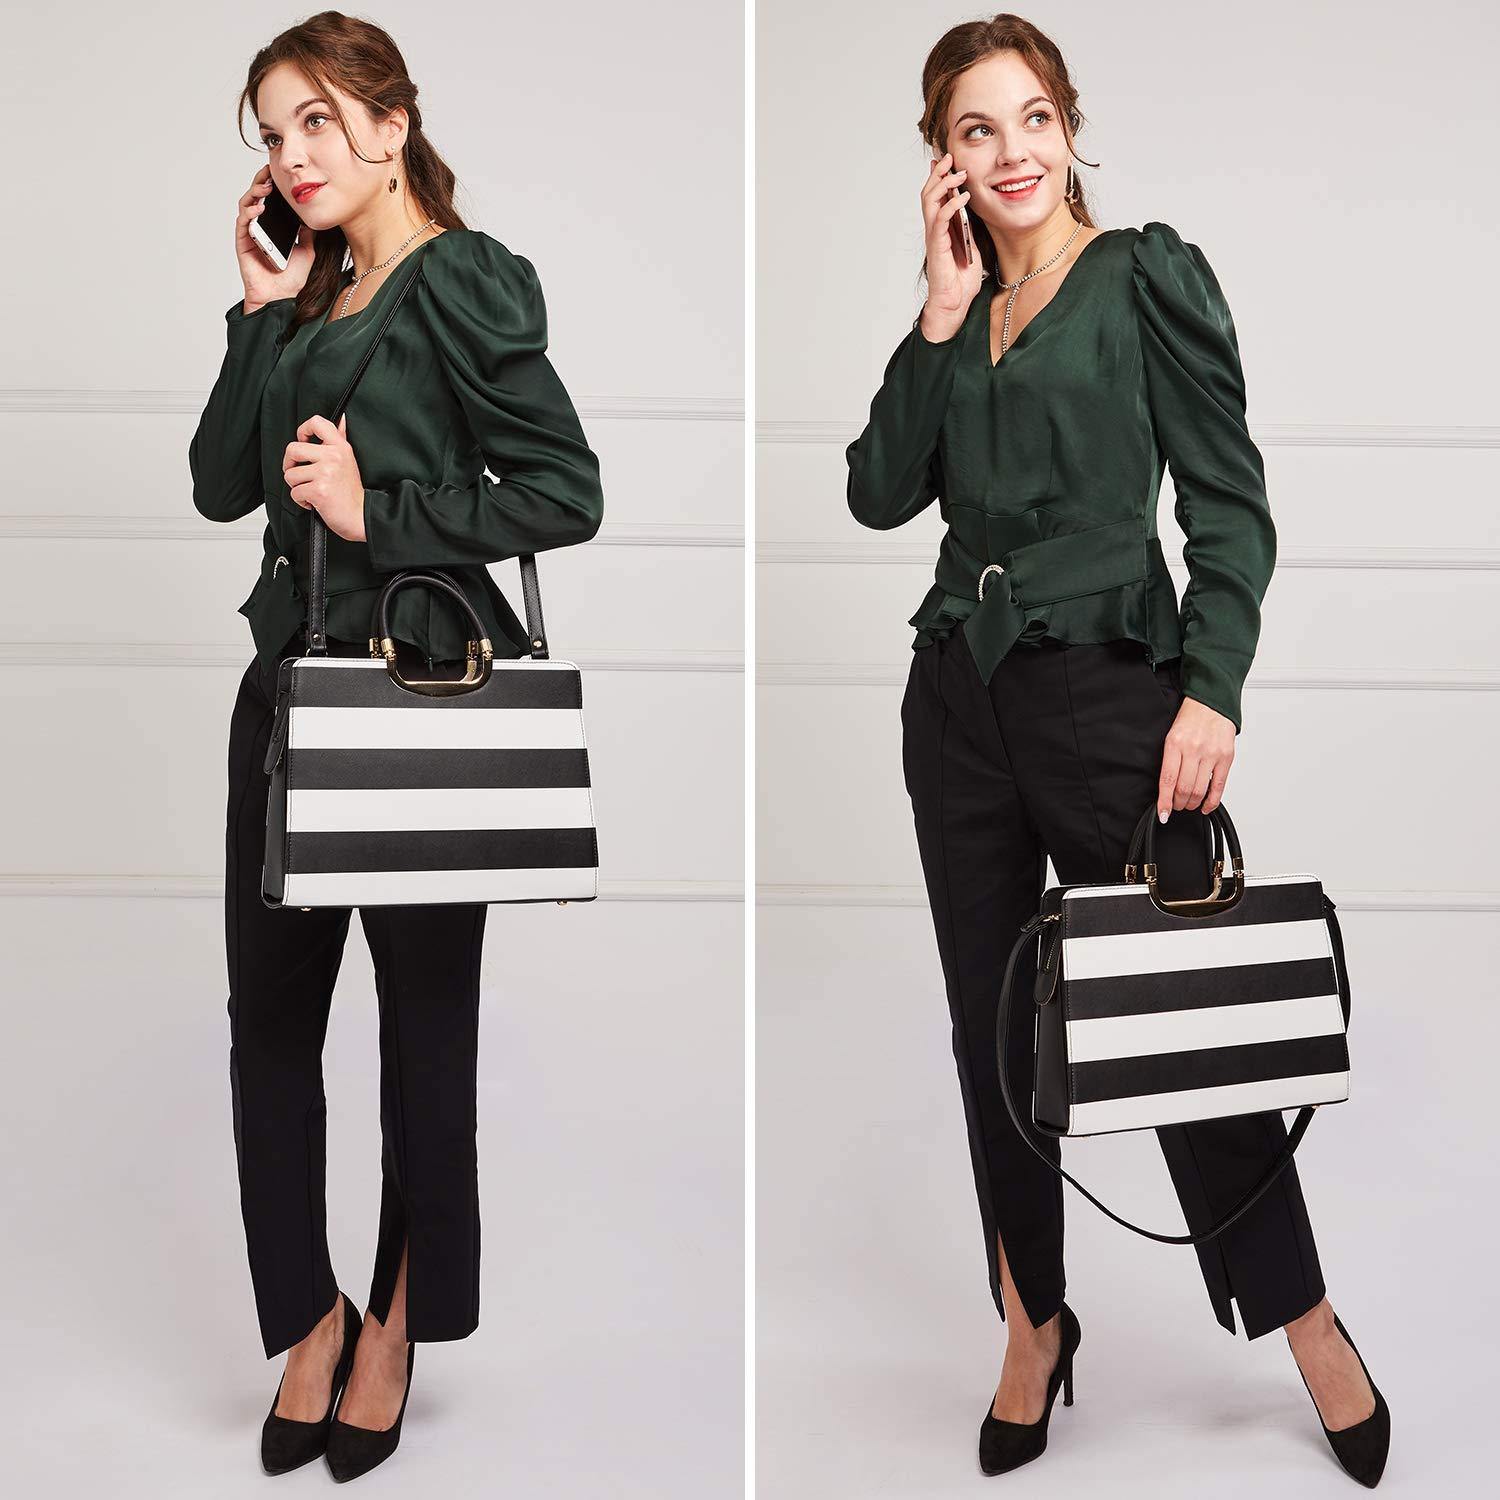 New Fashion Women Pu Leather Shoulder Bags Handbags Striped